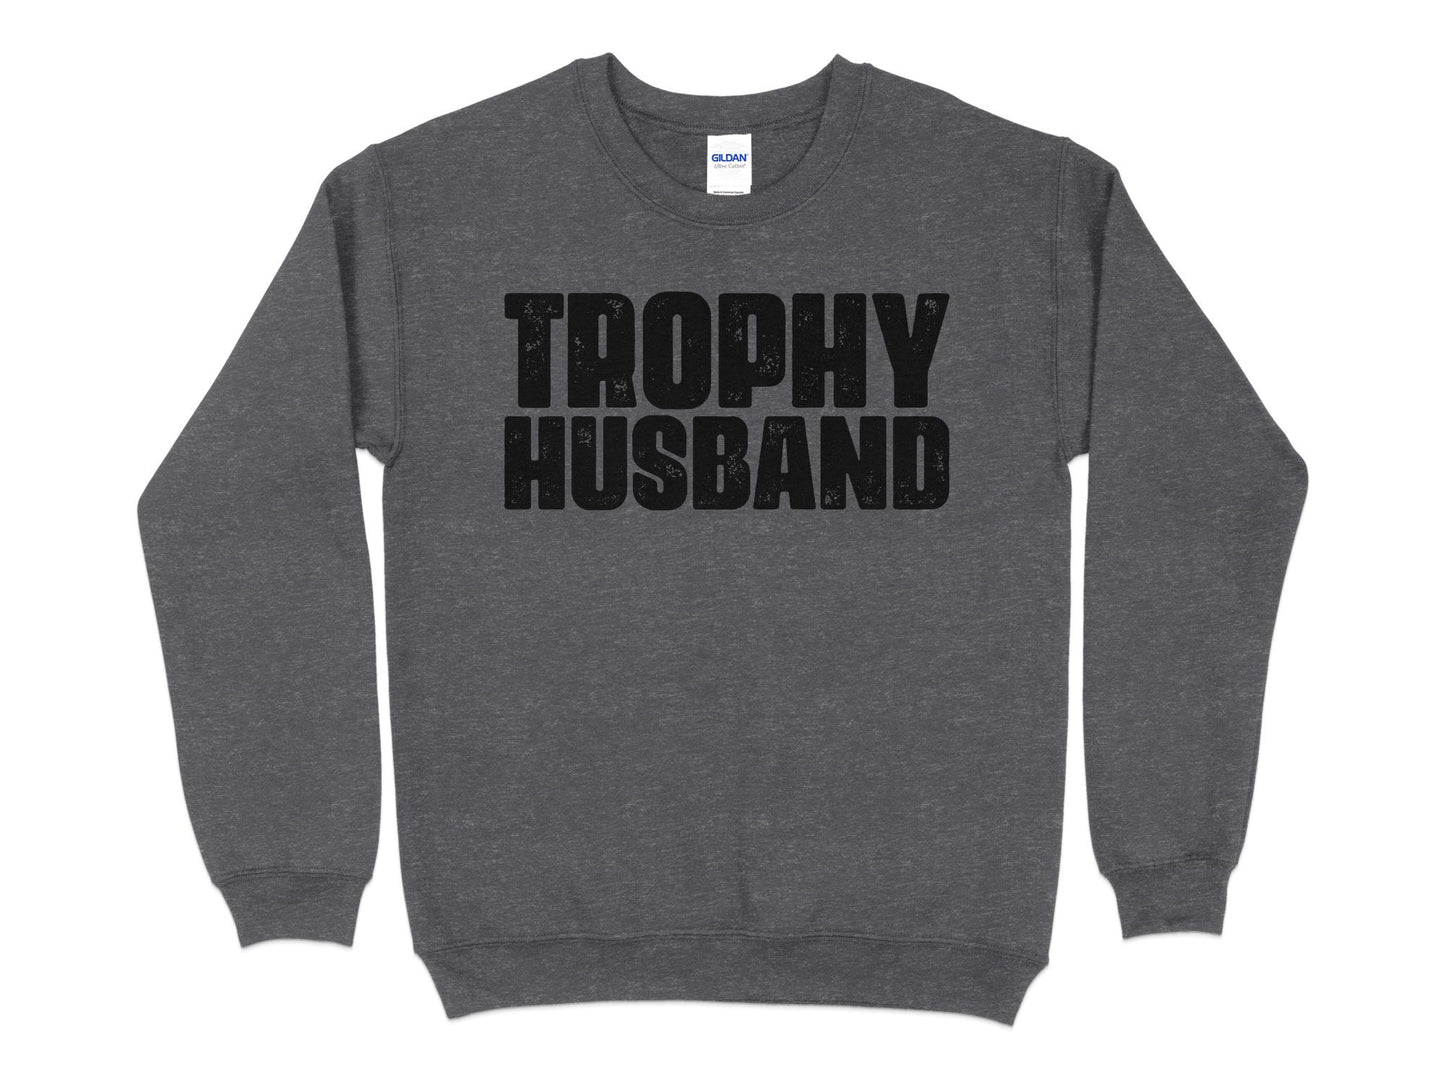 Trophy Husband Sweatshirt, dark gray